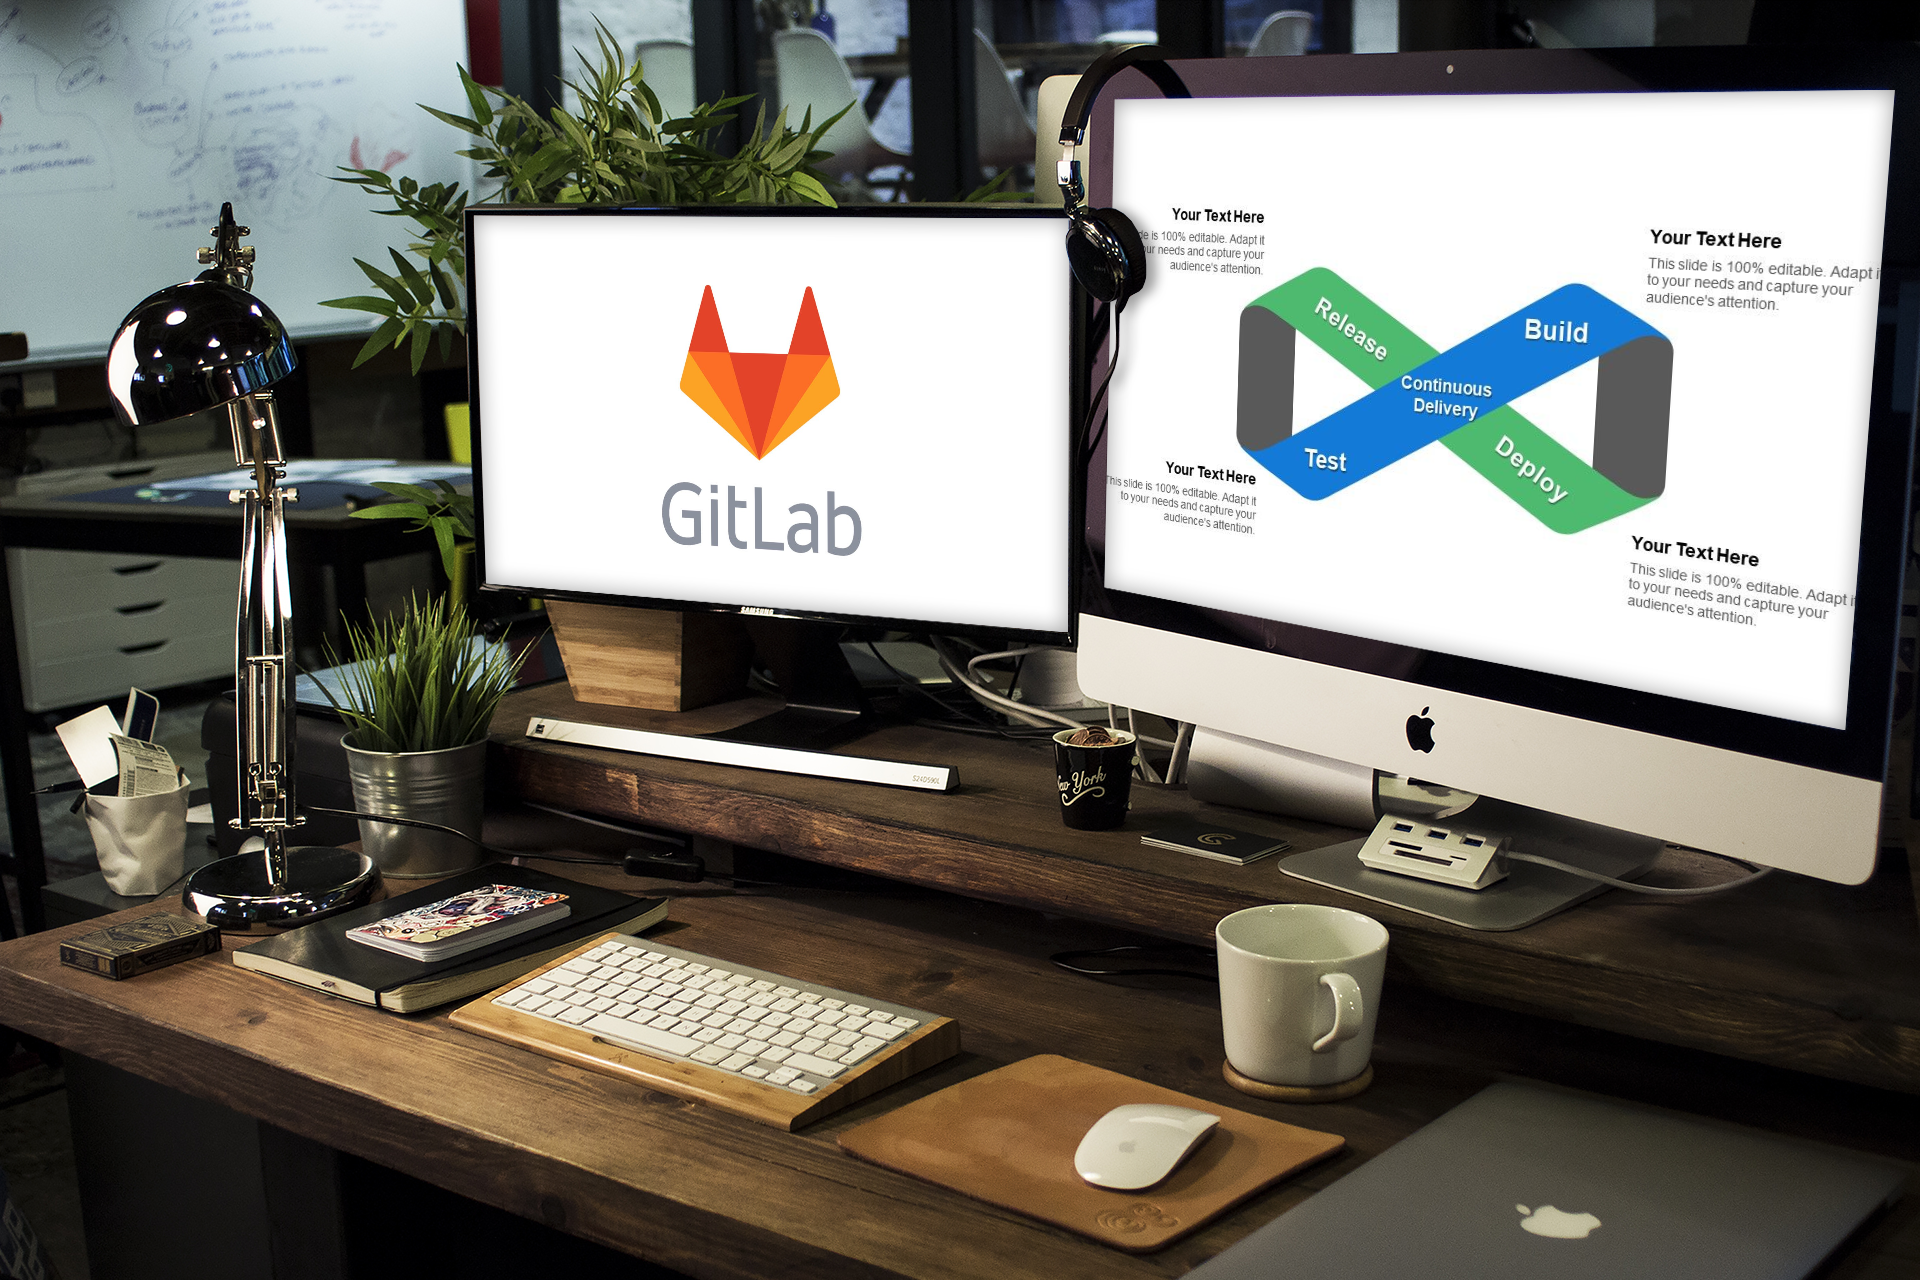 GitLab Initial Public Offering